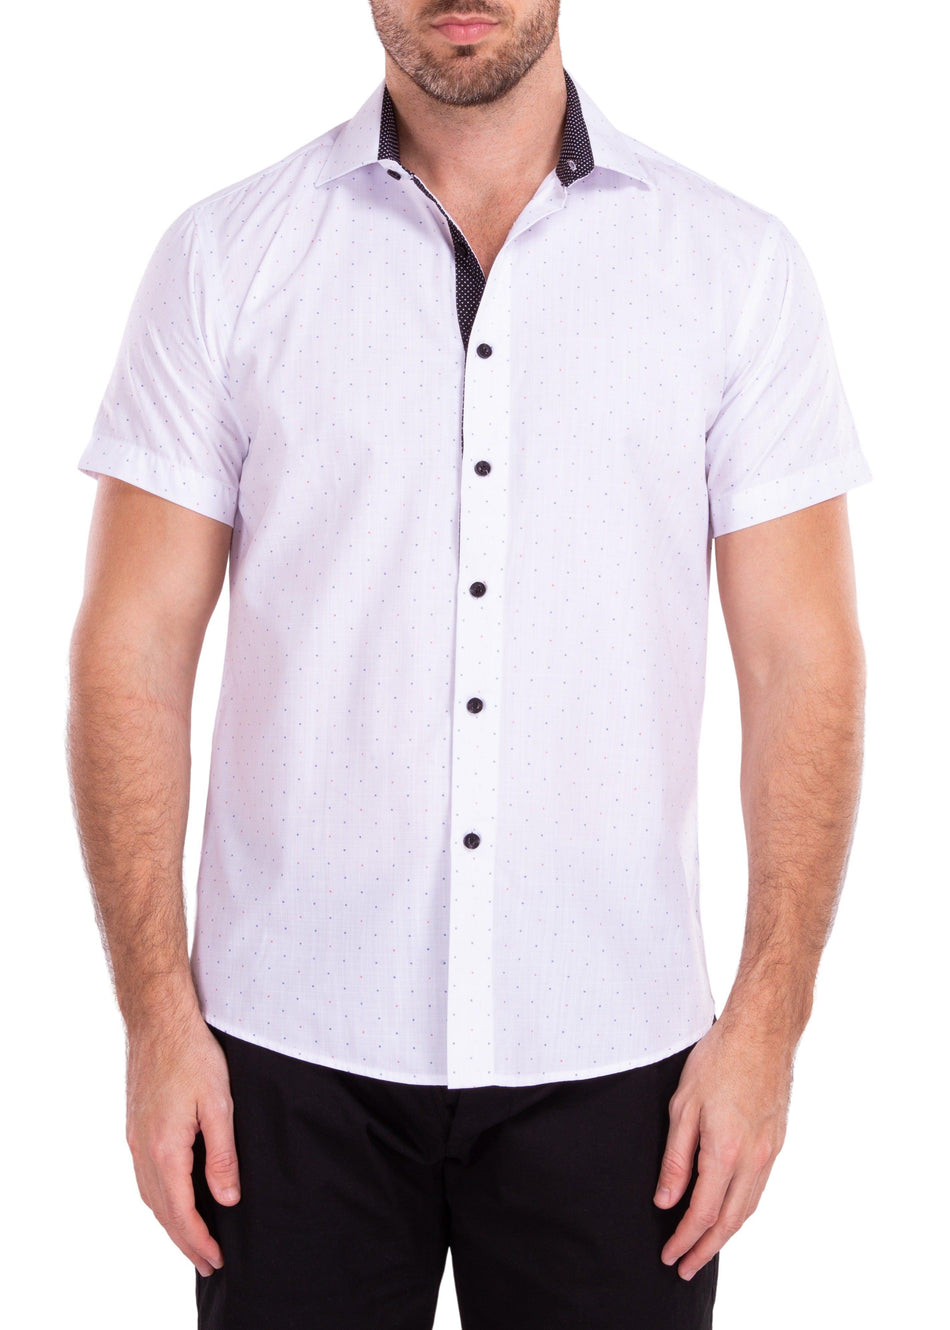 Stitched Linen Texture White Button Up Short Sleeve Dress Shirt